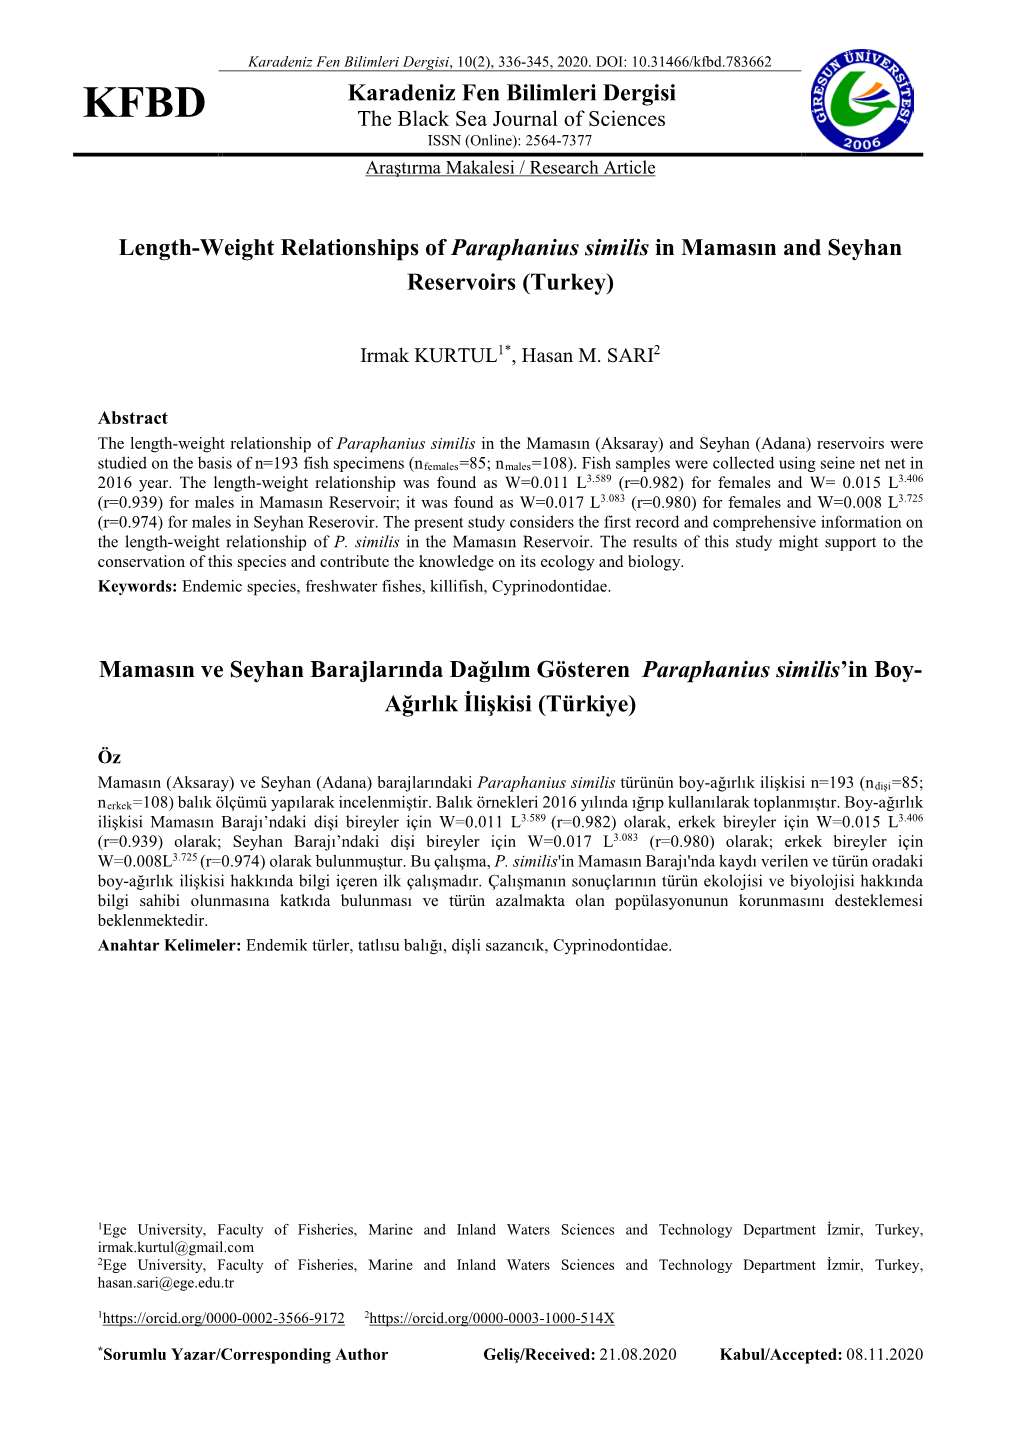 Karadeniz Fen Bilimleri Dergisi Length-Weight